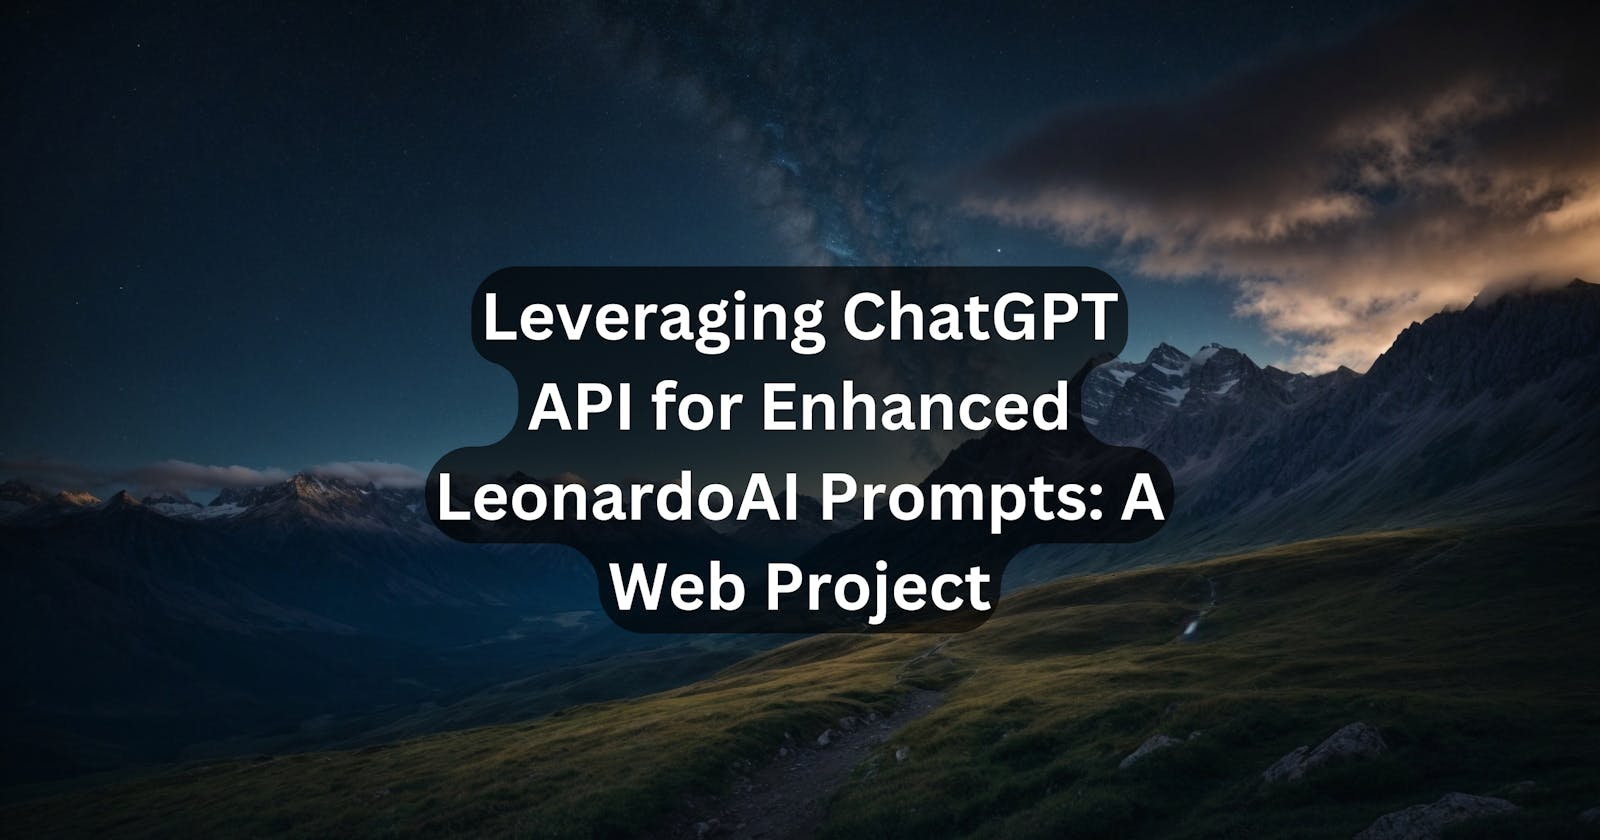 Leveraging ChatGPT API for Enhanced LeonardoAI Prompts: A Web Project